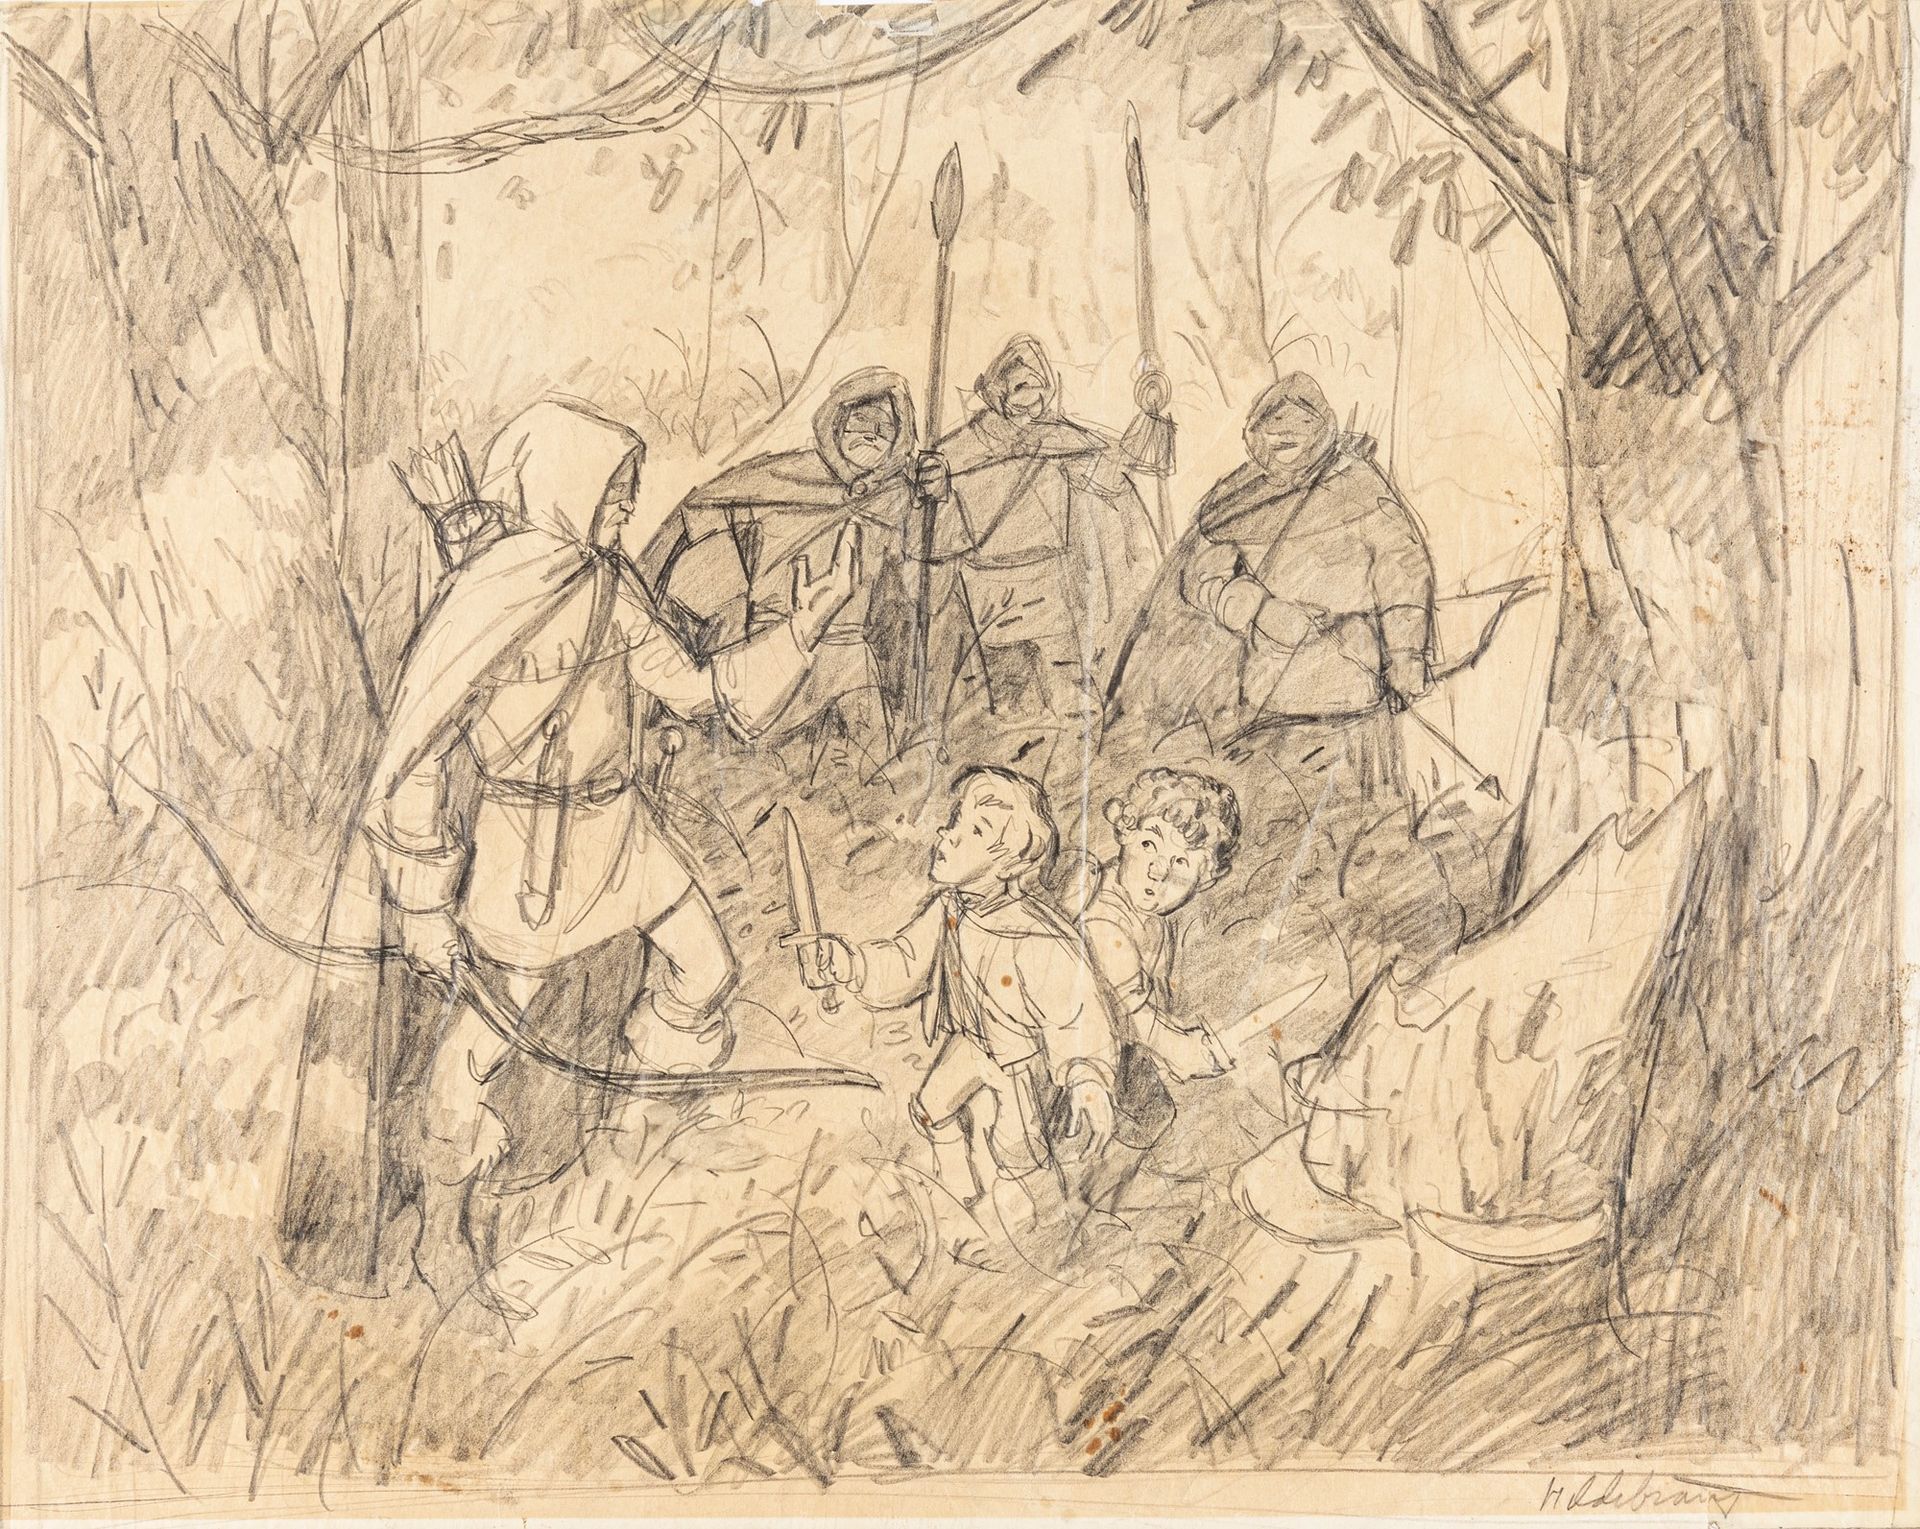 Greg & Tim Hildebrandt 法拉米尔，1977年

纸上铅笔
41x52
希尔德布兰特兄弟为他们的名画 "法拉米尔 "绘制的初稿，首次发表在1&hellip;